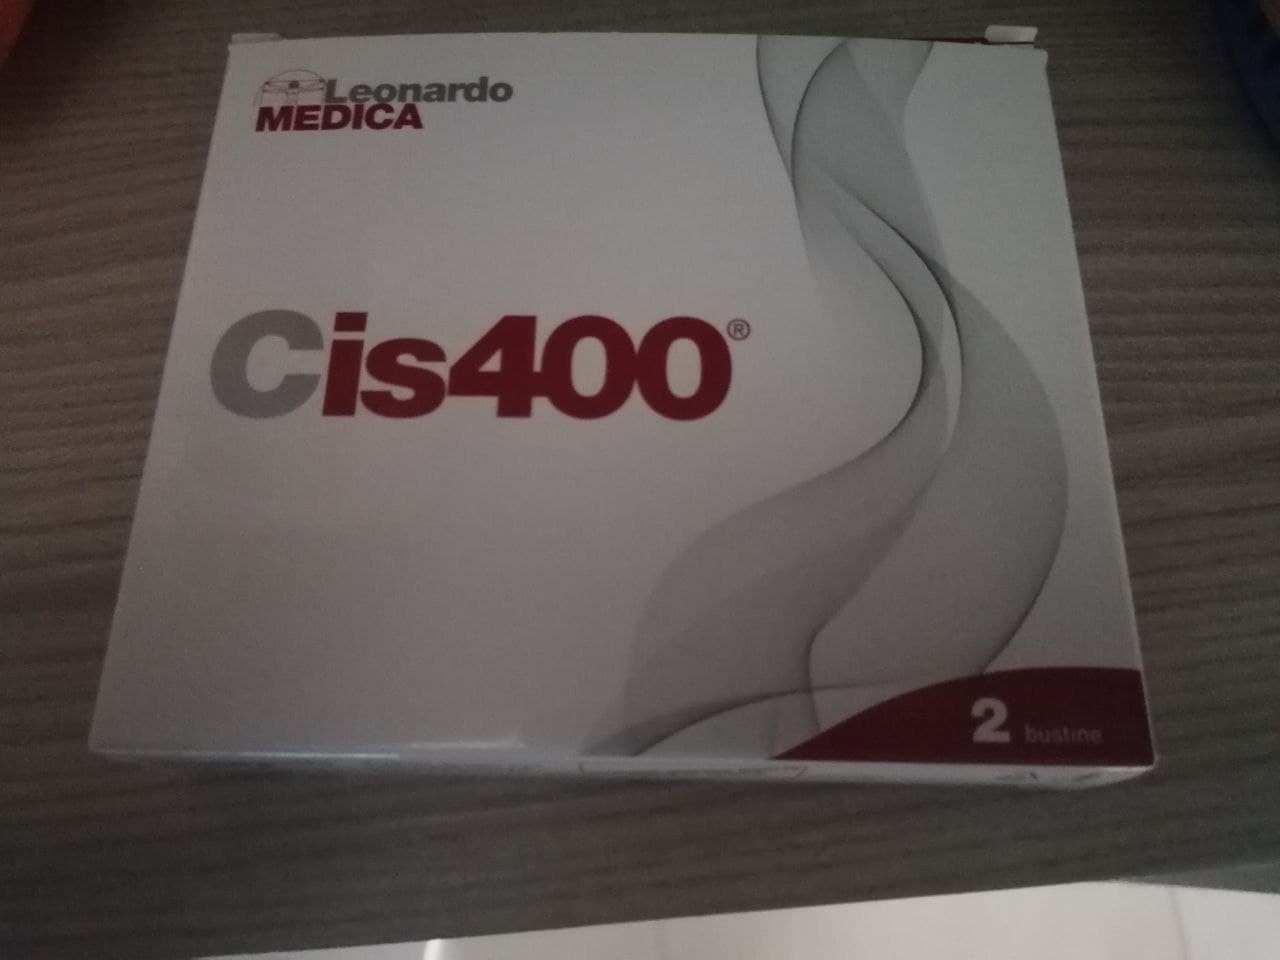 Cis400